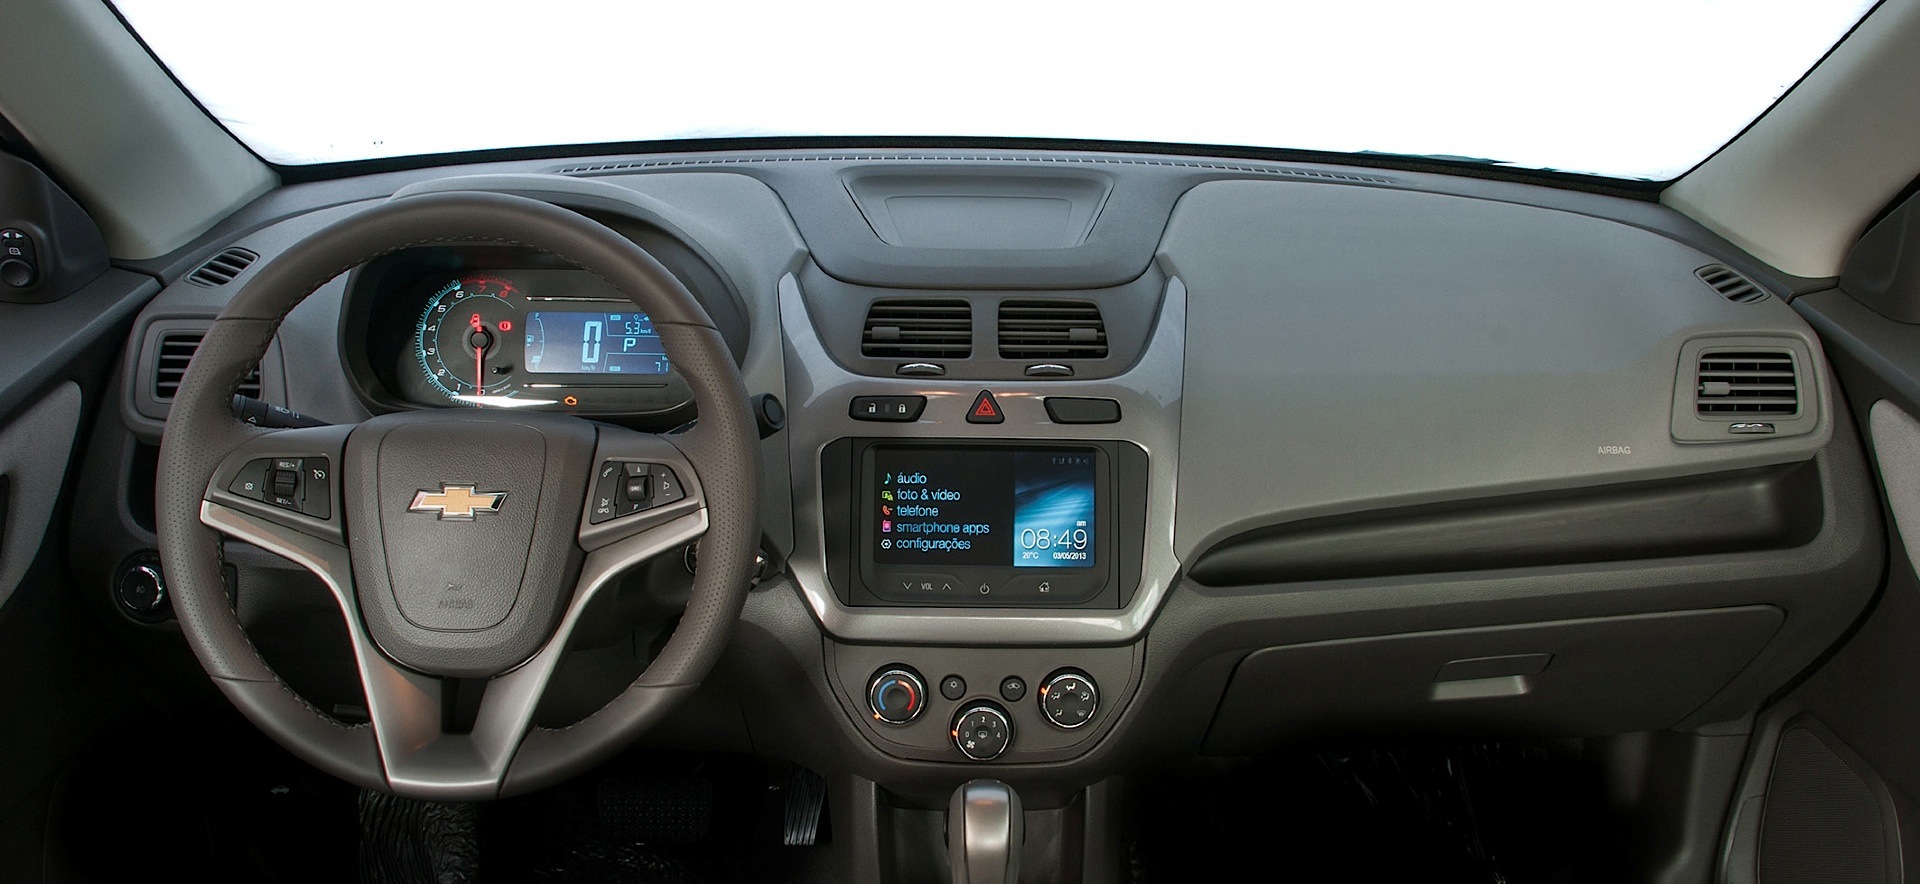 Chevrolet Cobalt interior - Cockpit